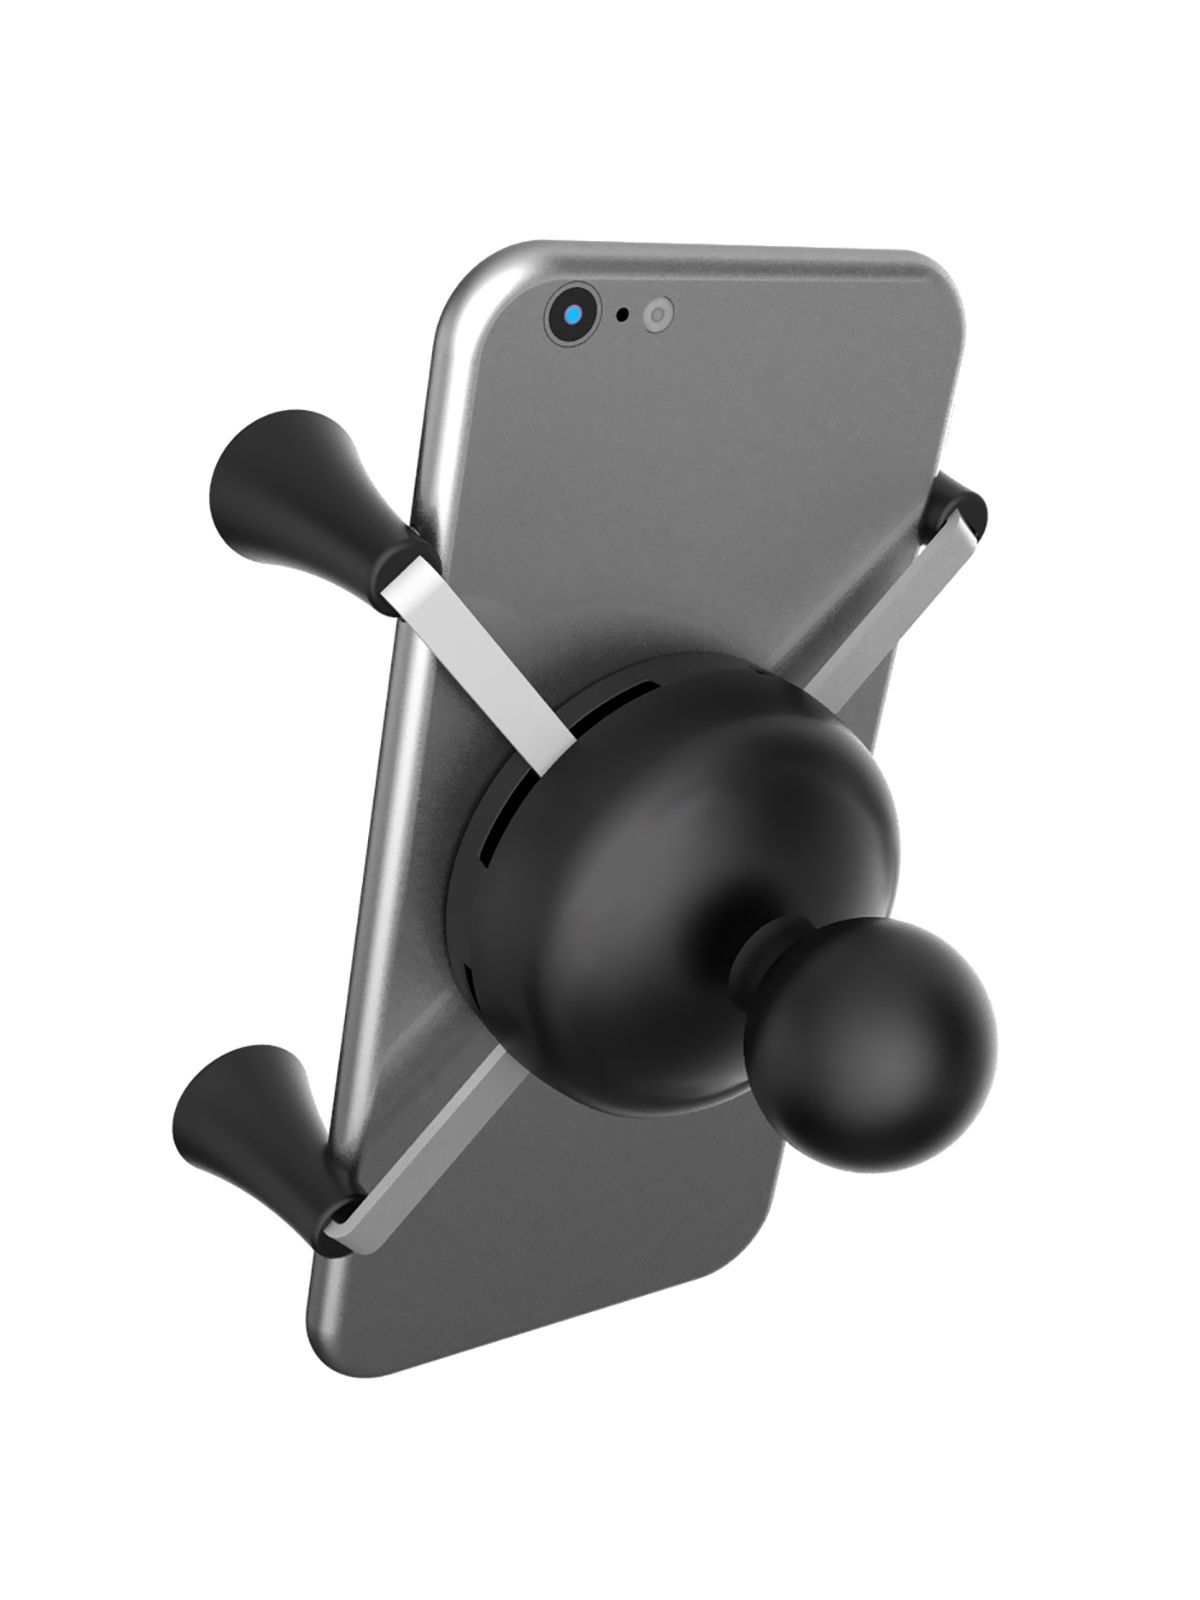 RAM MOUNTS X-Grip Universal Unit Cradle for Smartphones - with 1" B-Ball